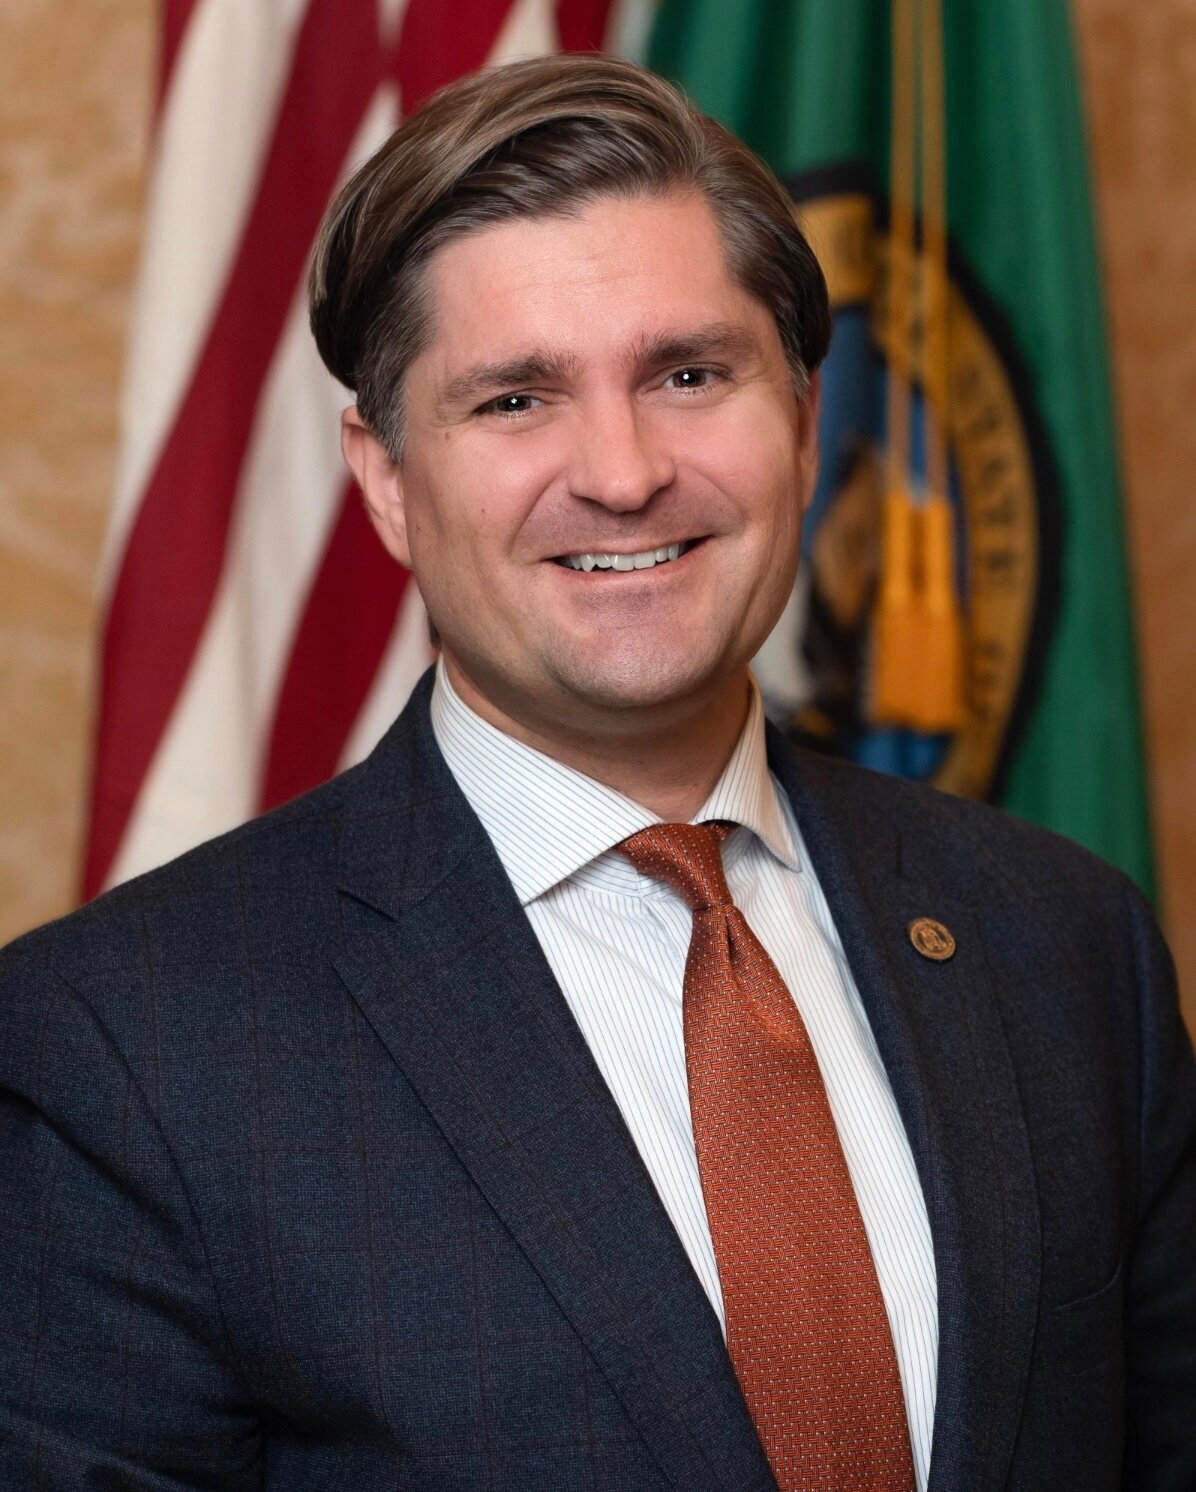 Washington State Treasurer Mike Pellicciotti was elected Washington’s 24th State Treasurer in 2020.